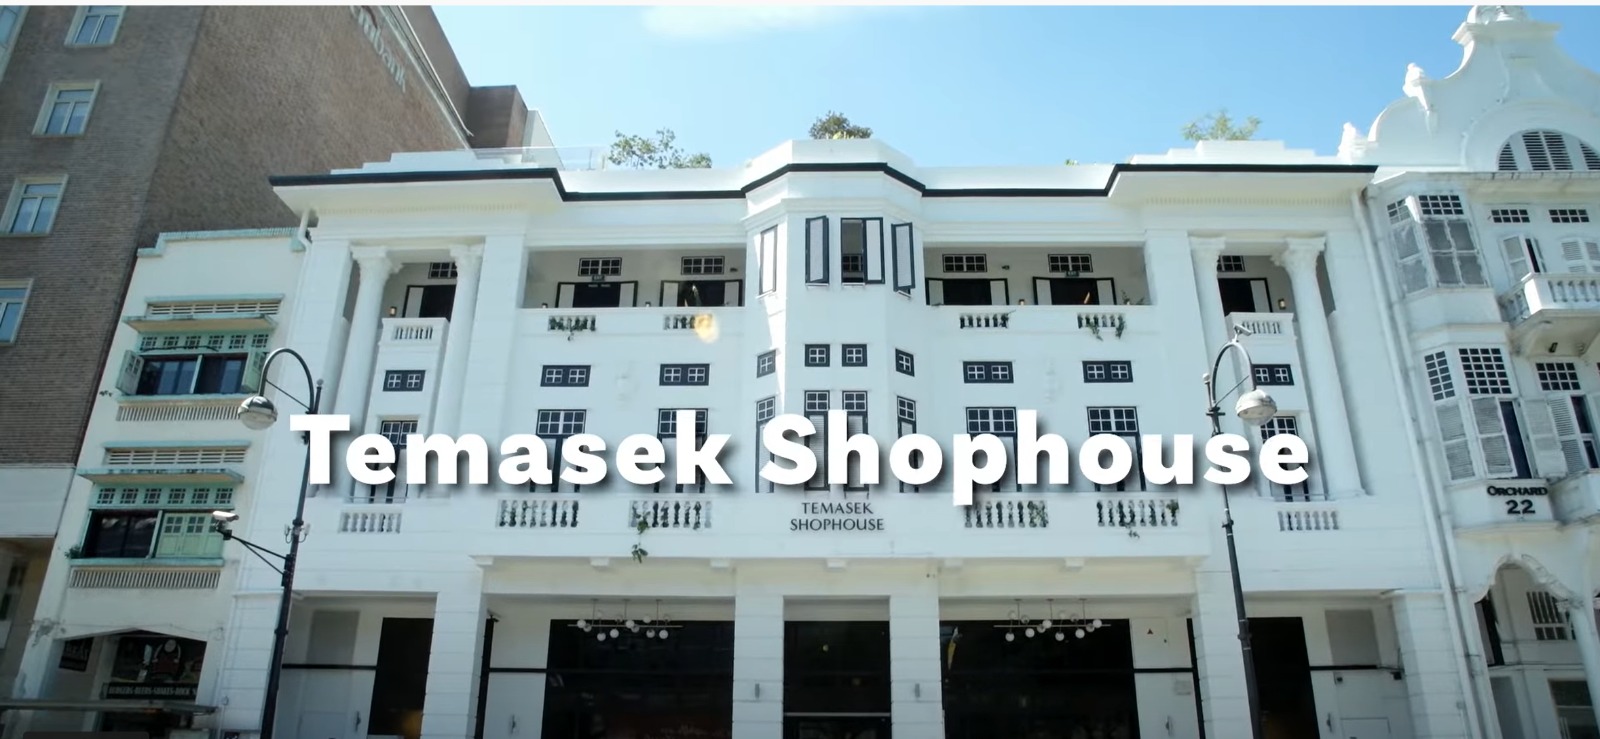 Temasek Shophouse Launch Video 2019